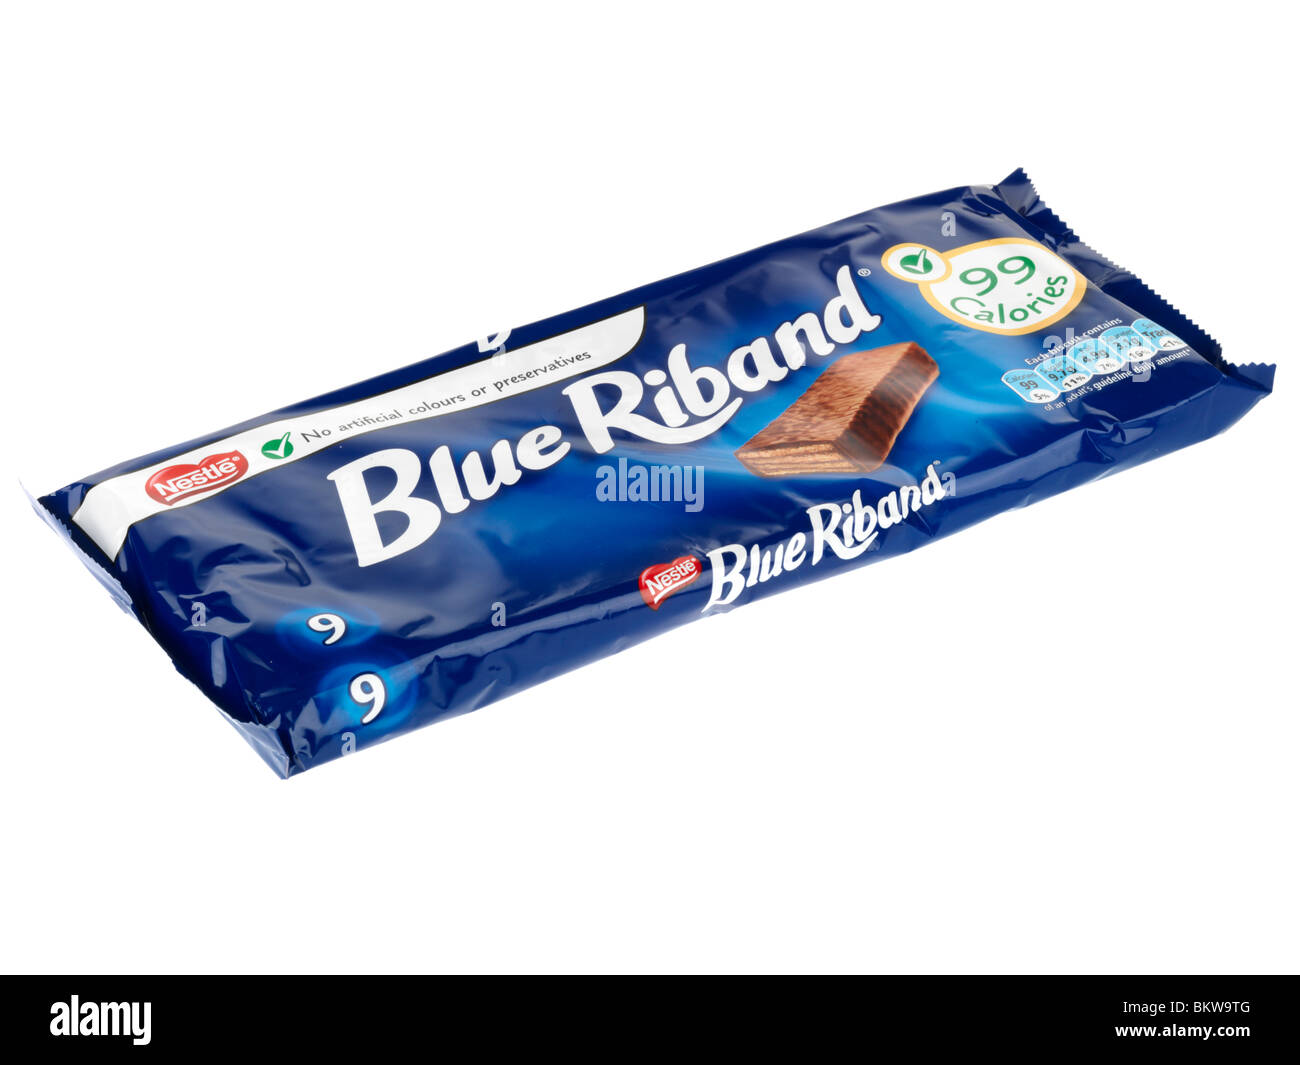 Q&A: Blue ribbon or blue riband?